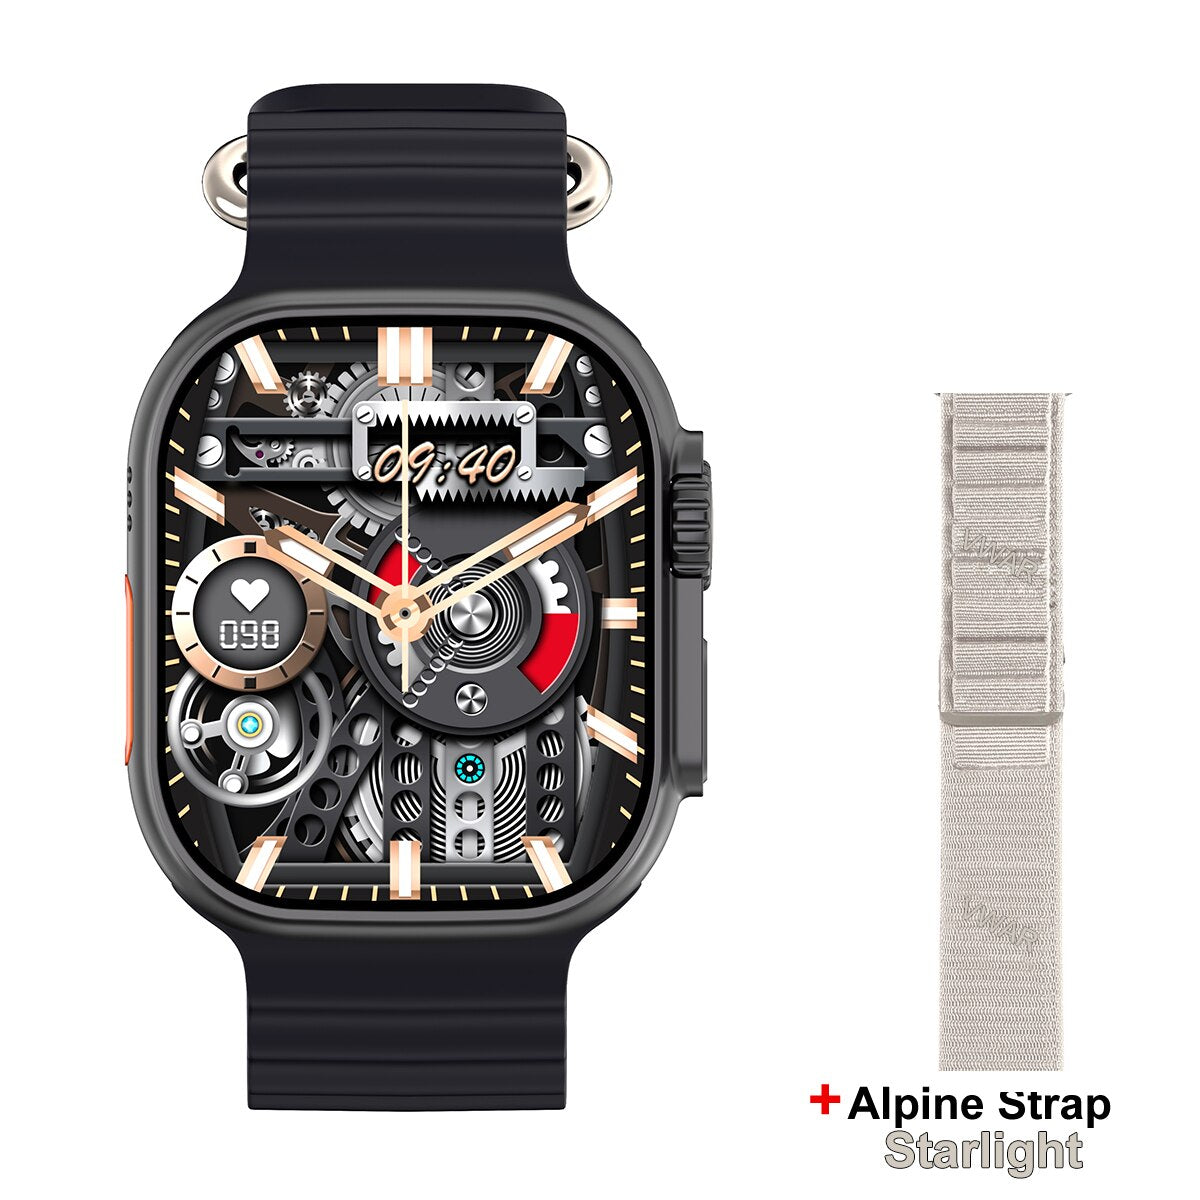 W69 Plus + Ultra Smart Watch Series 9 2.2" AMOLED Screen 2GB Rom IP68